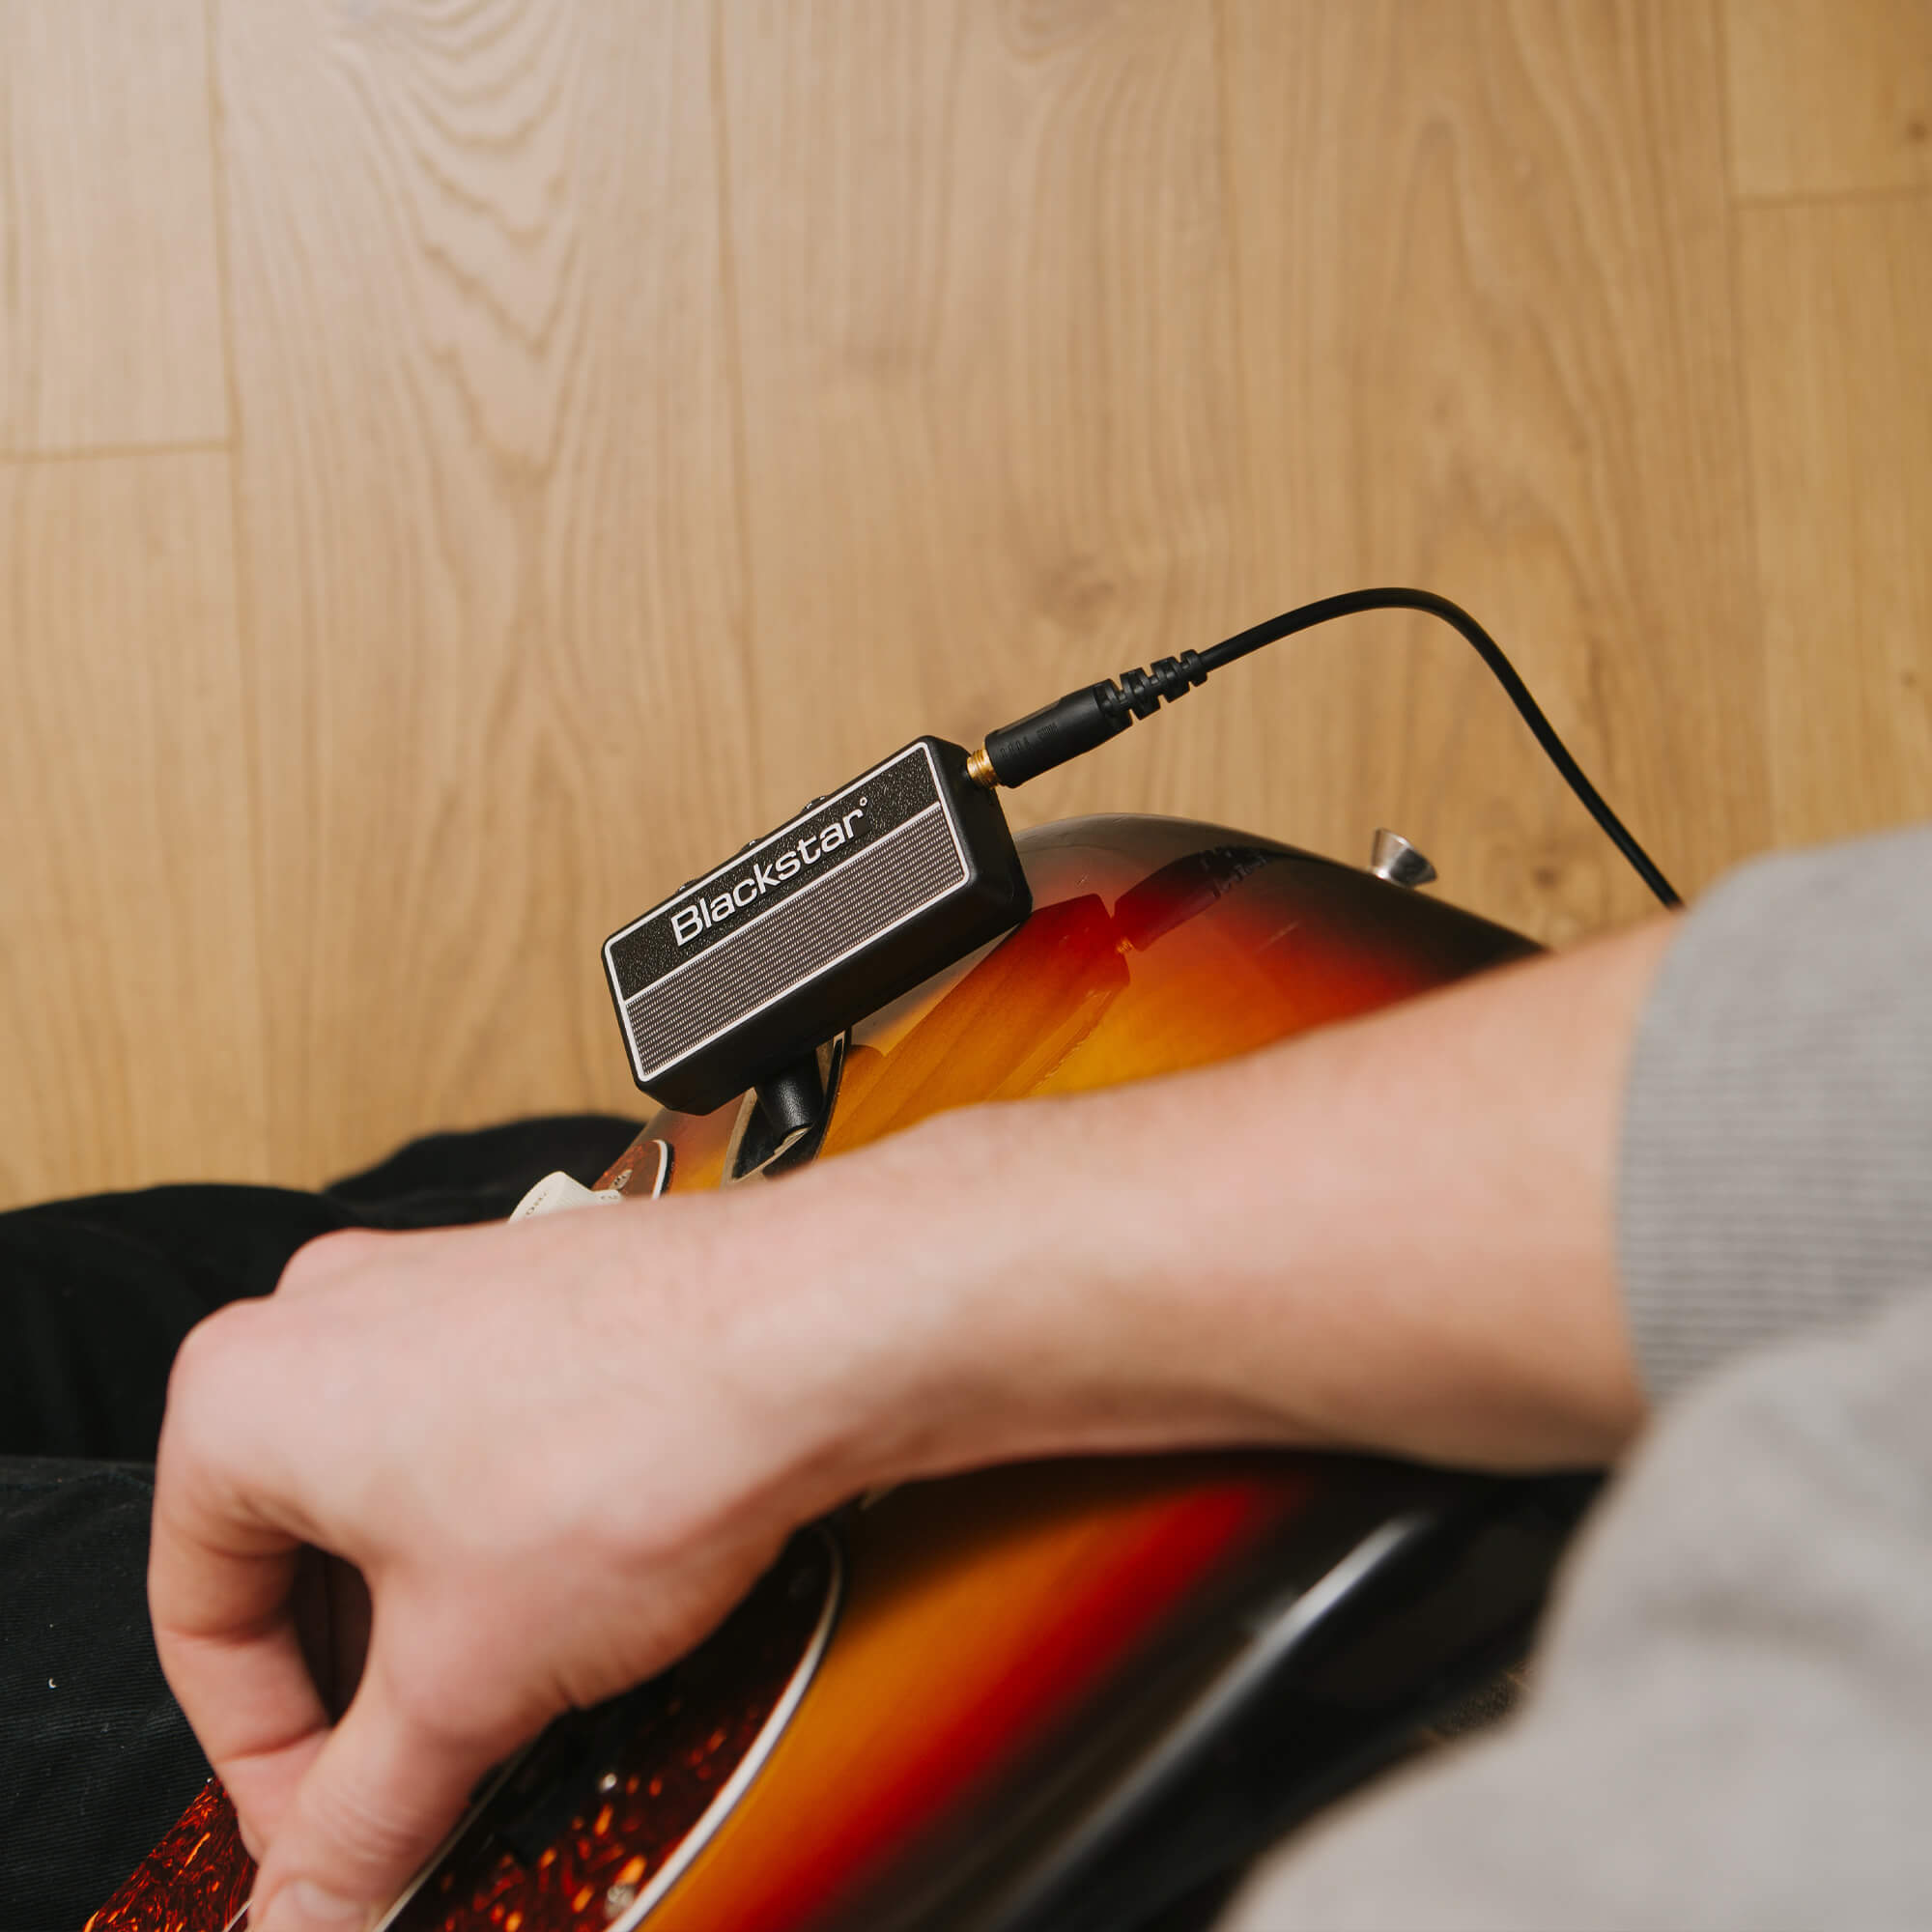 guitar player strumming guitar with Blackstar amPlug 2 FLY guitar amp plugged into guitar and headphones